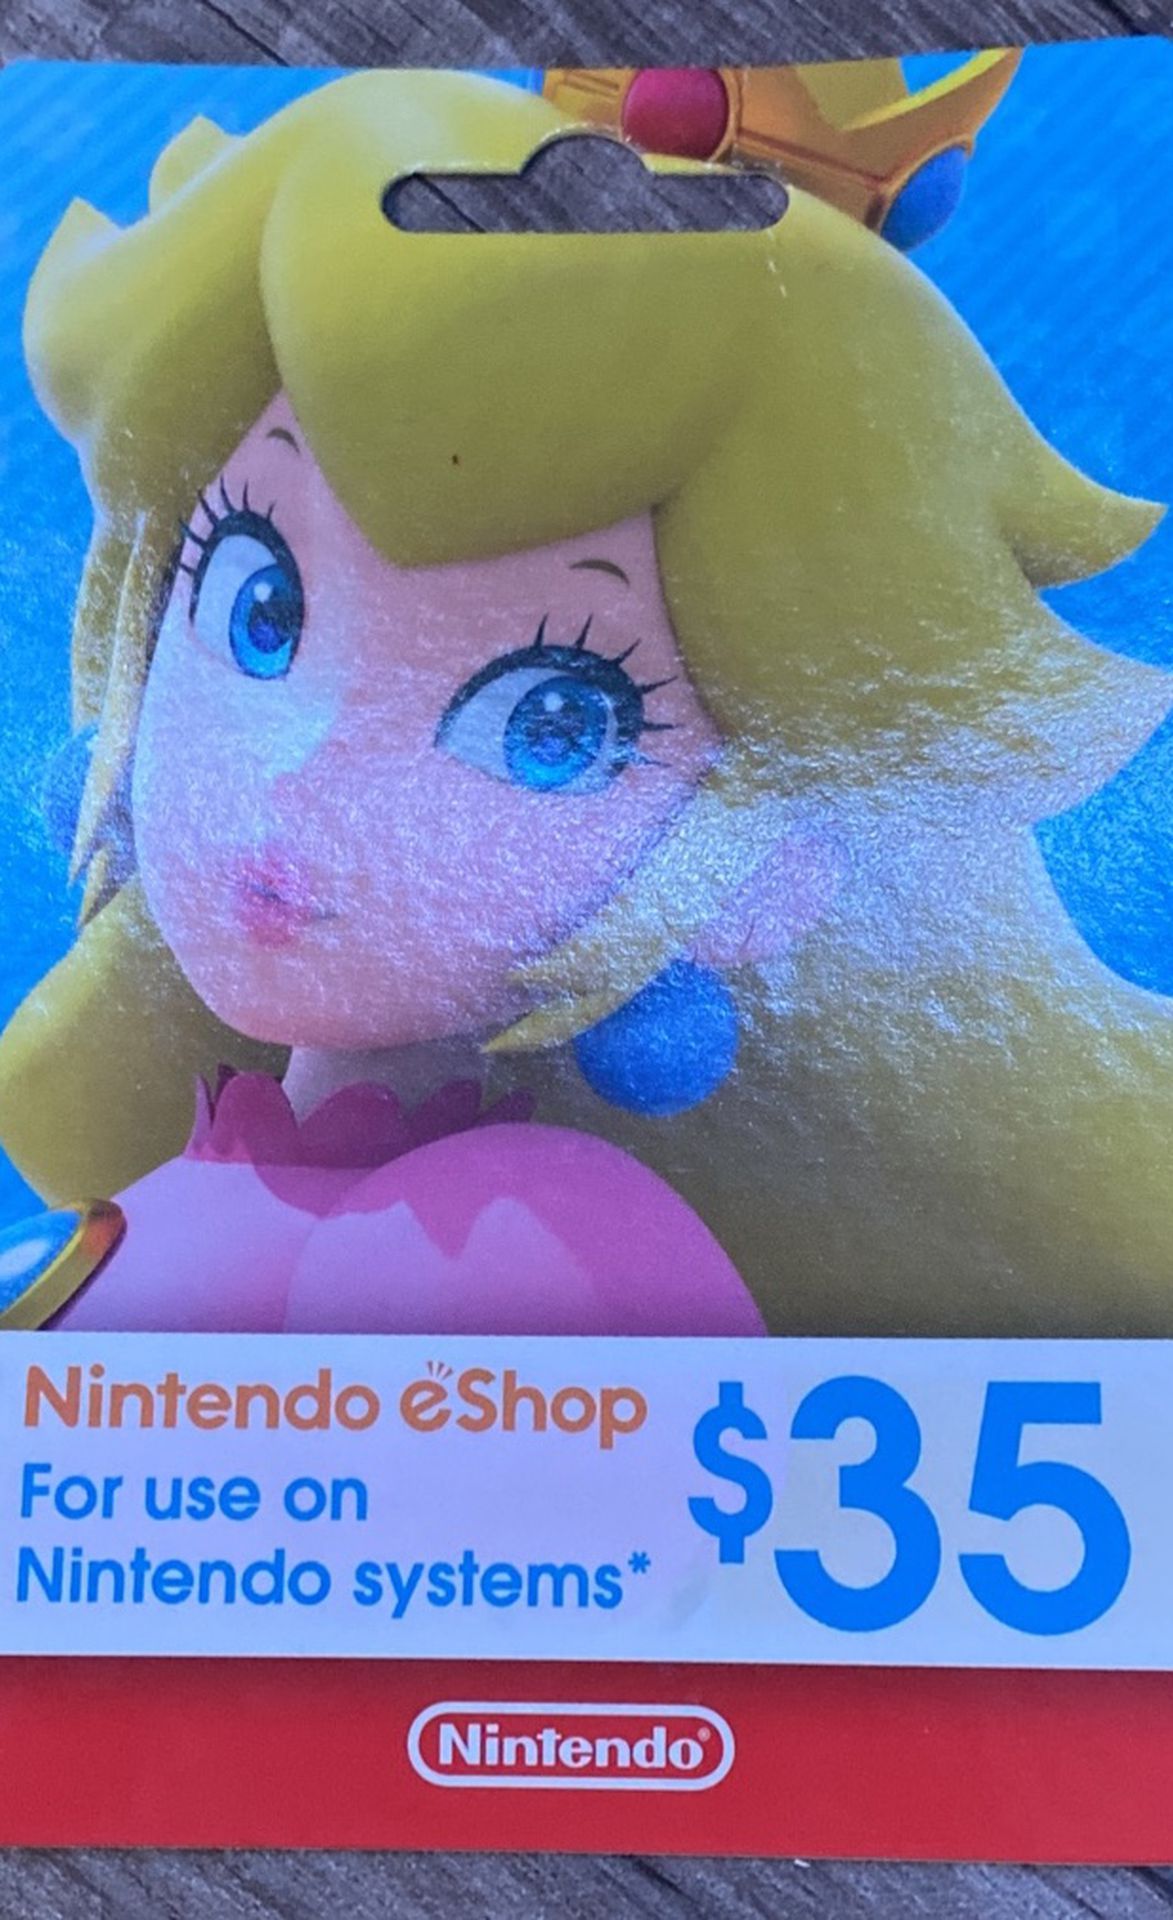 Nintendo Switch Eshop $35